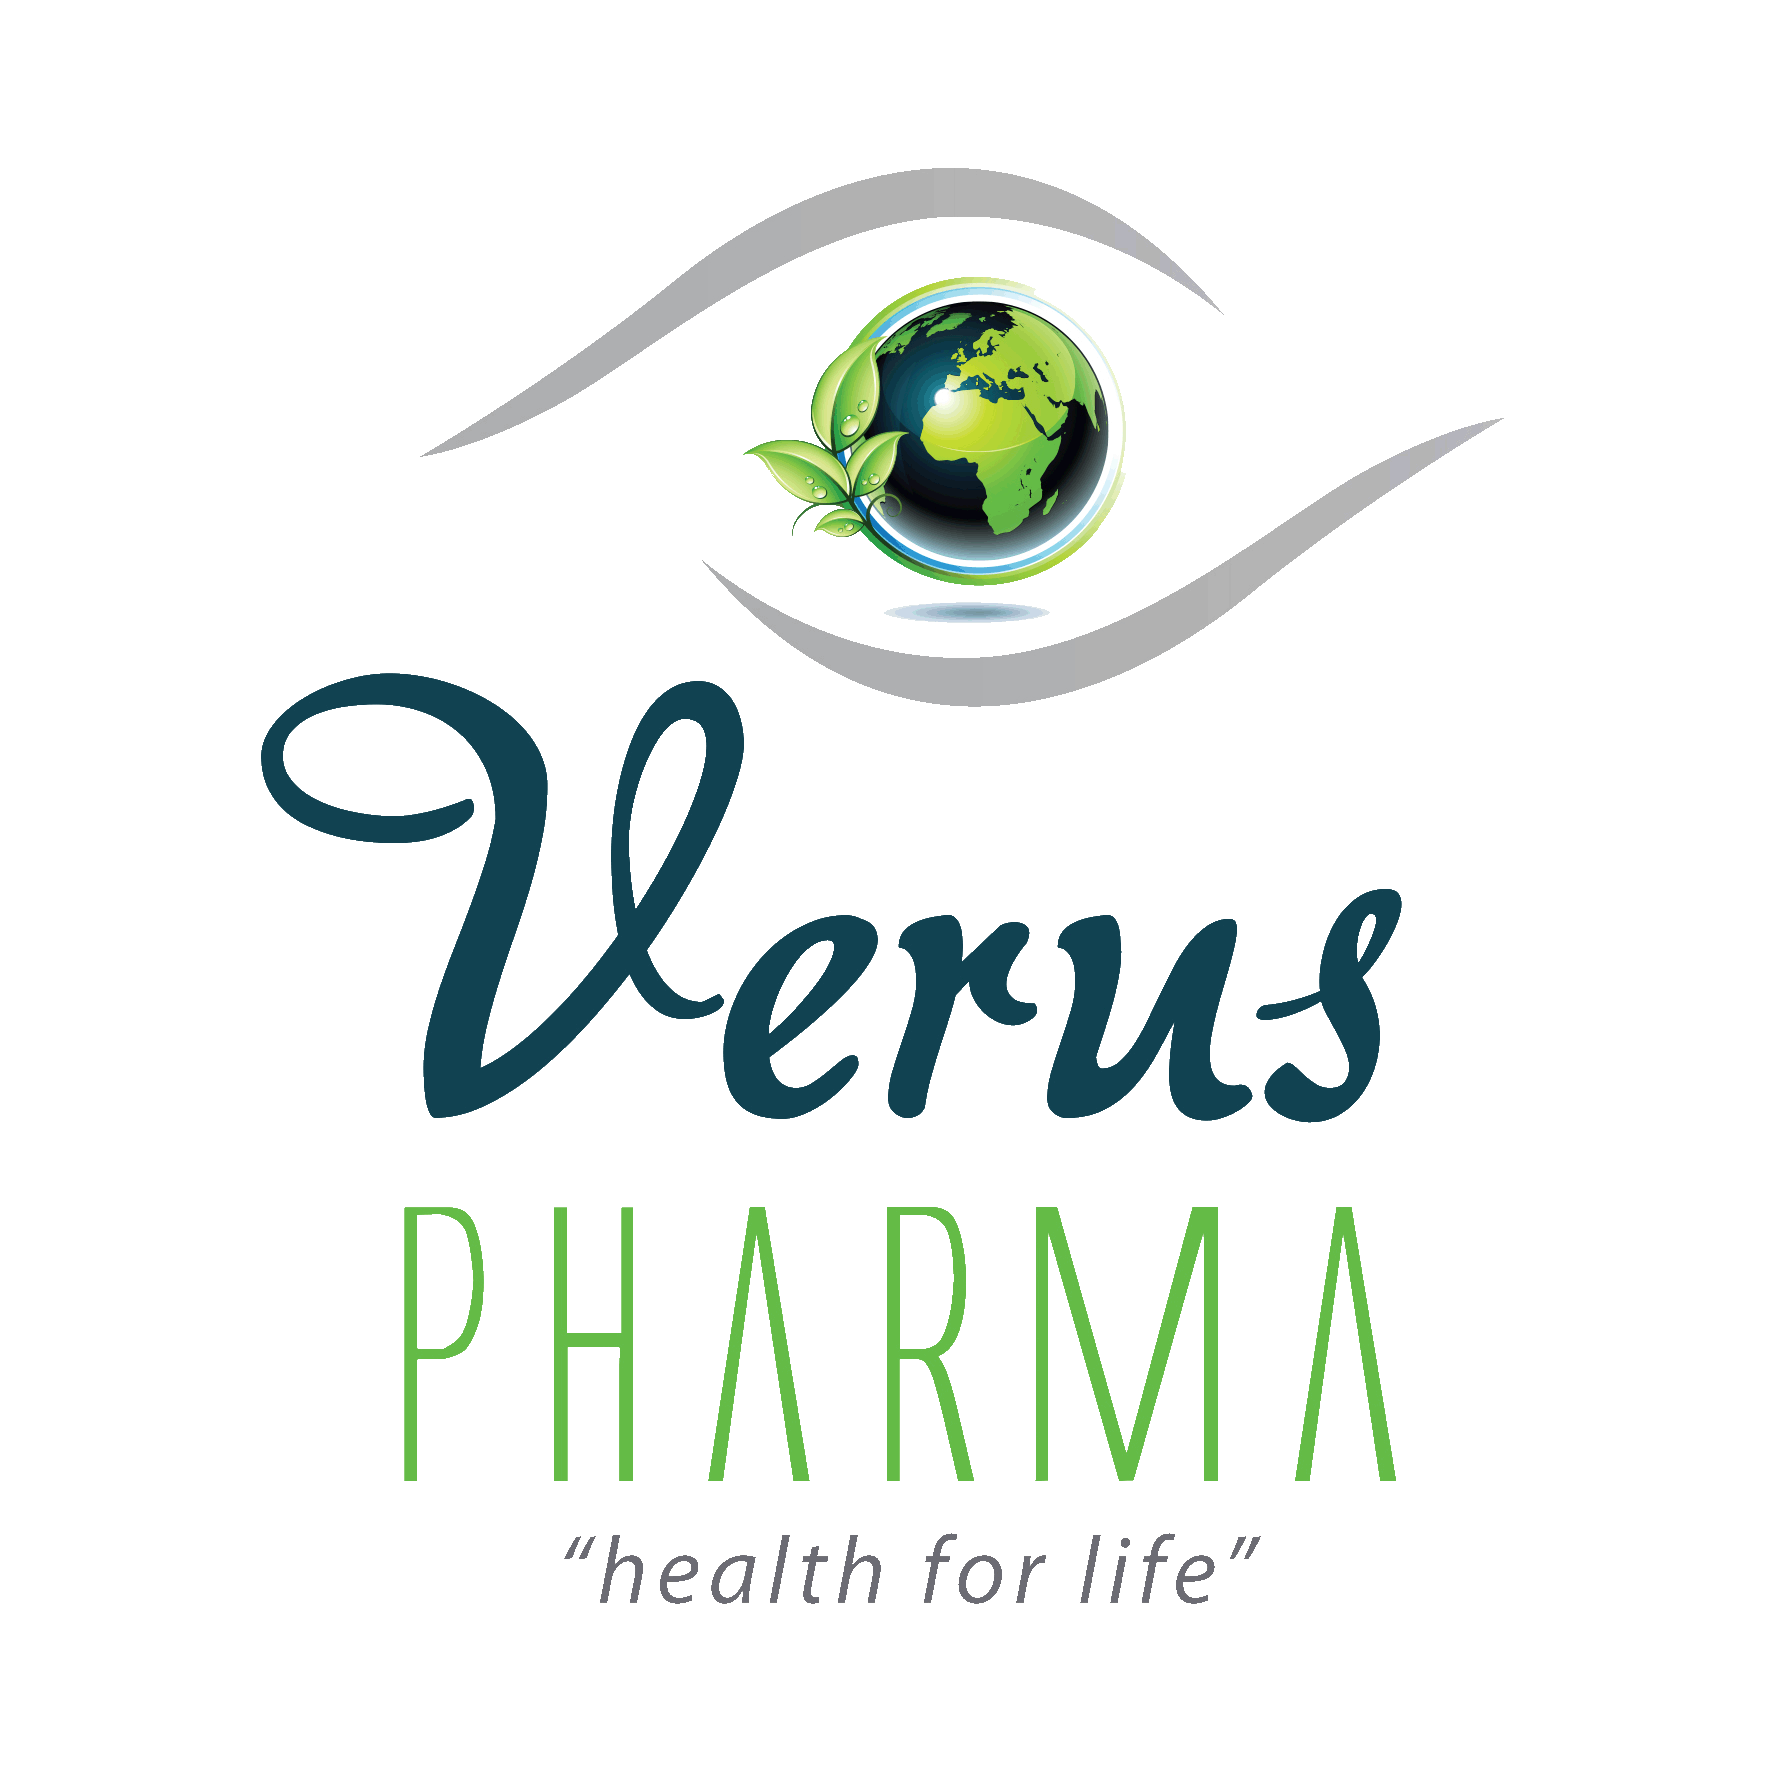 Verus Pharma